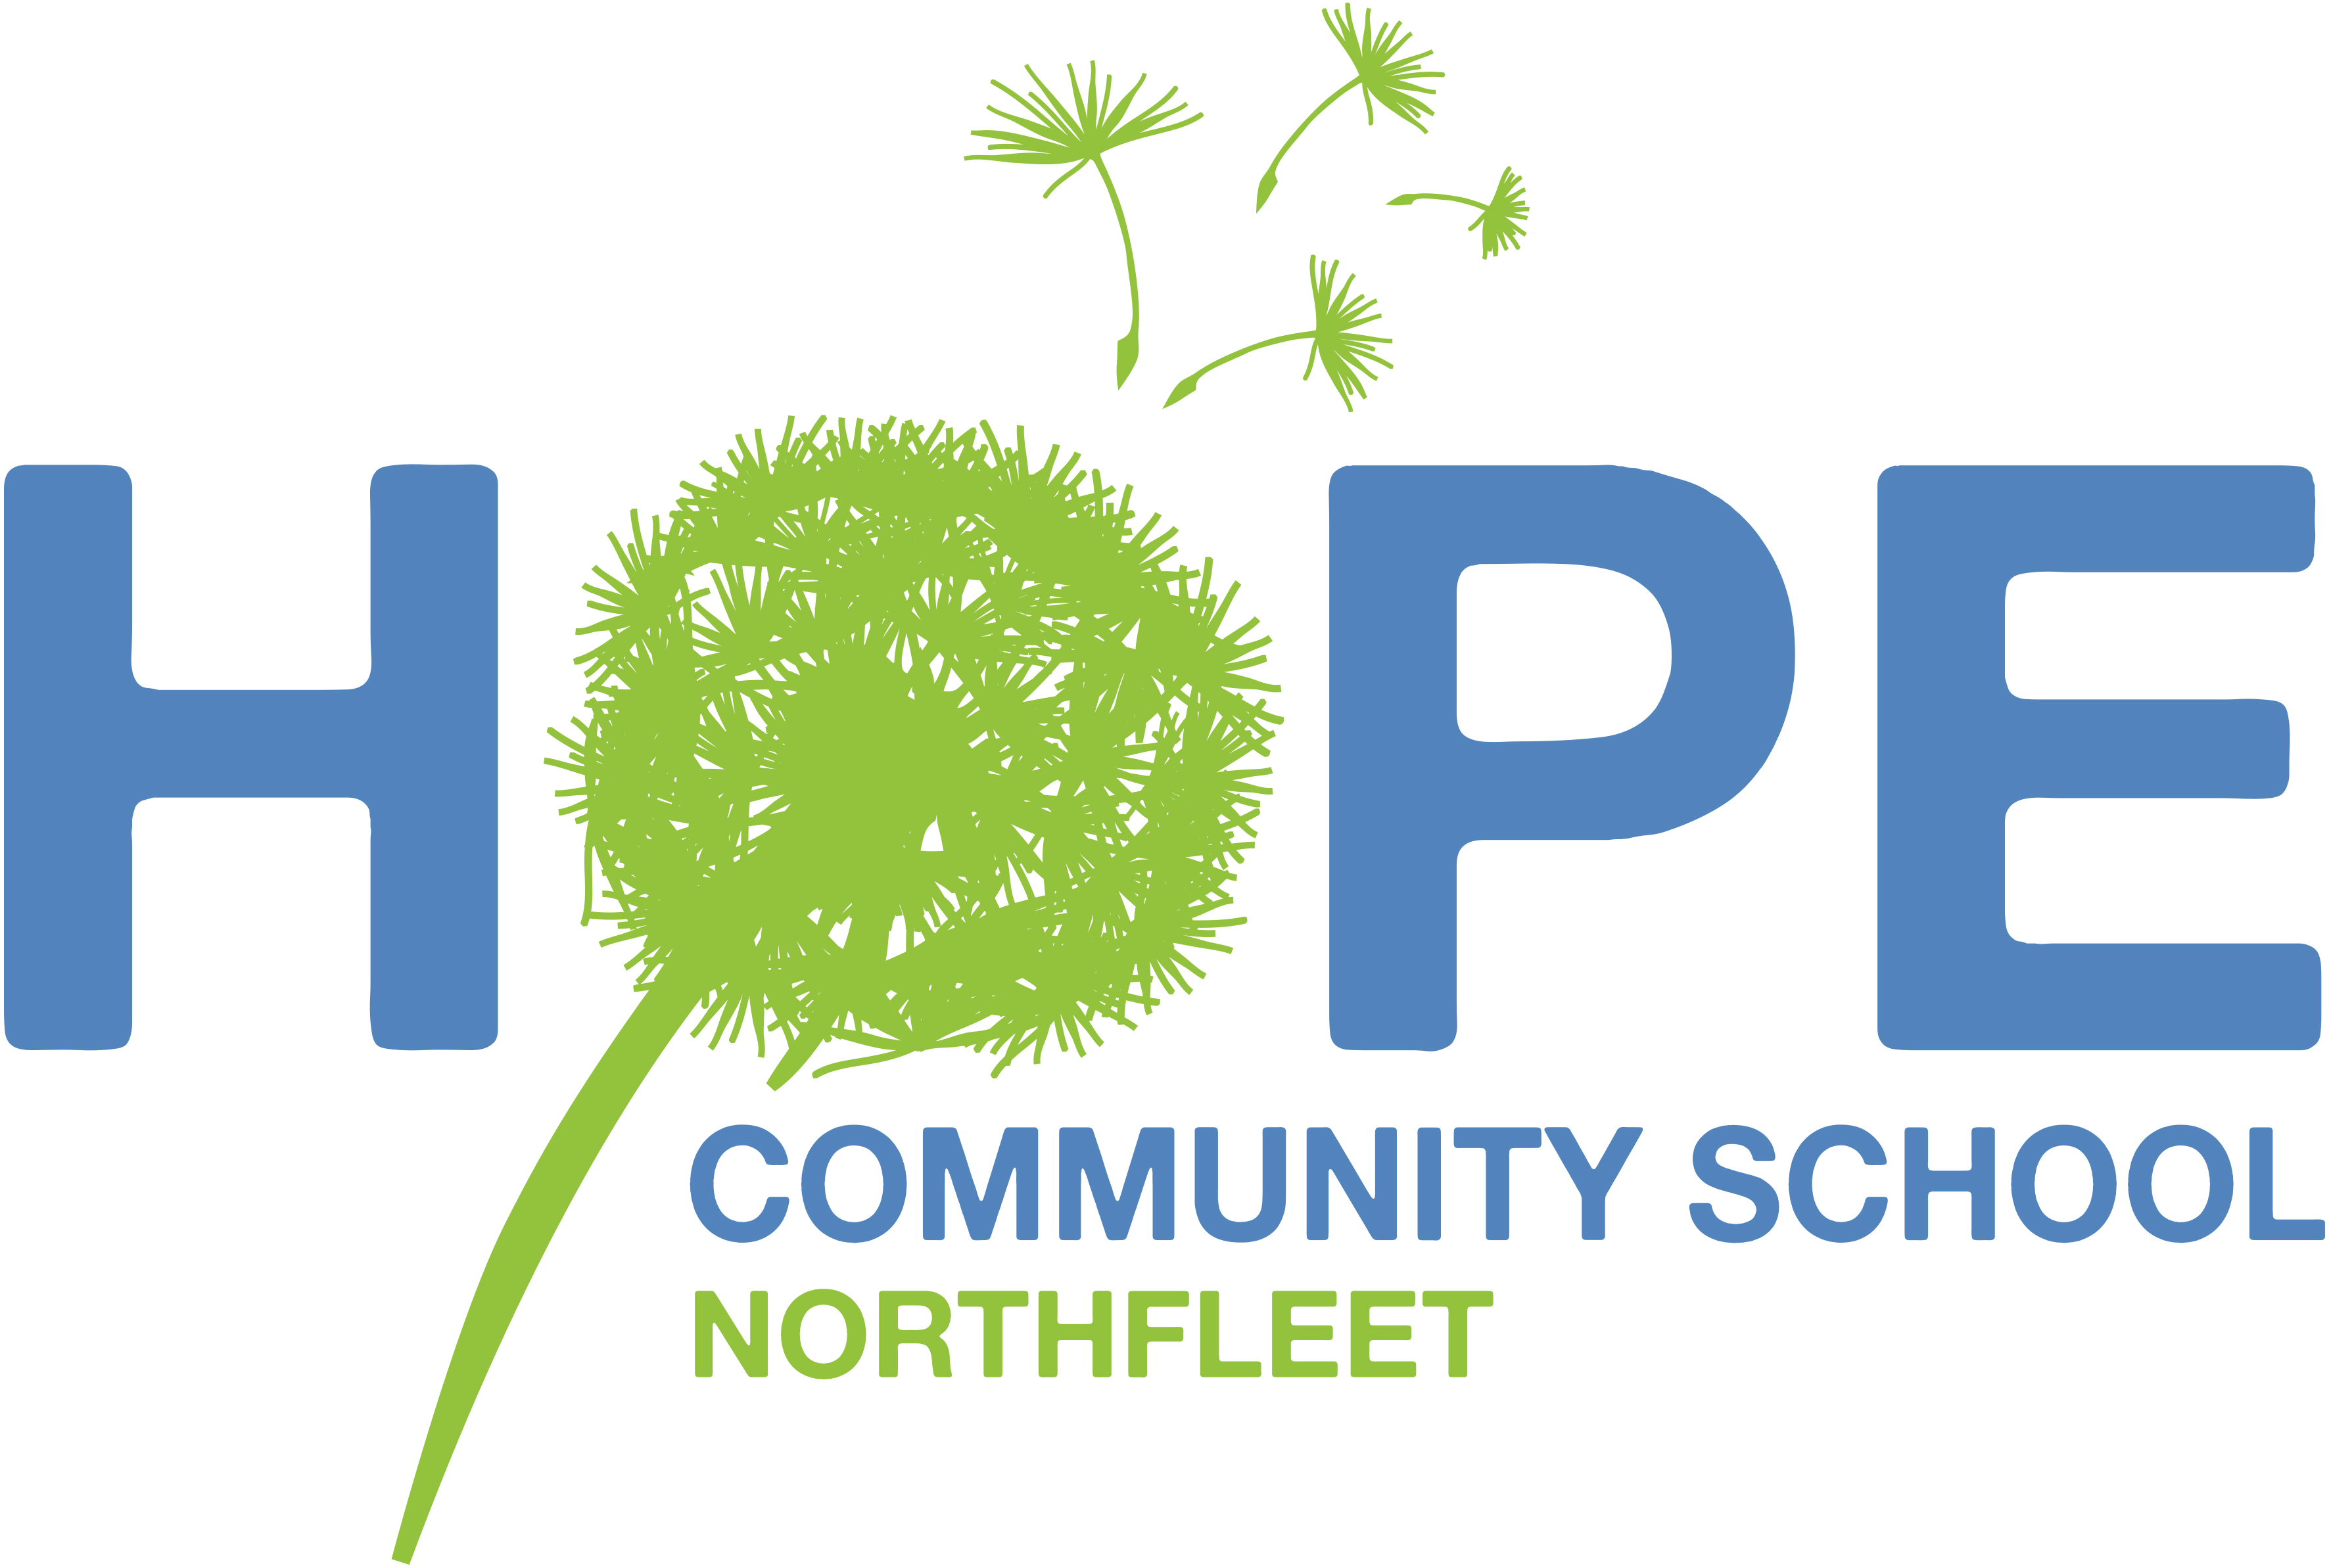 Hope Community School, Northfleet